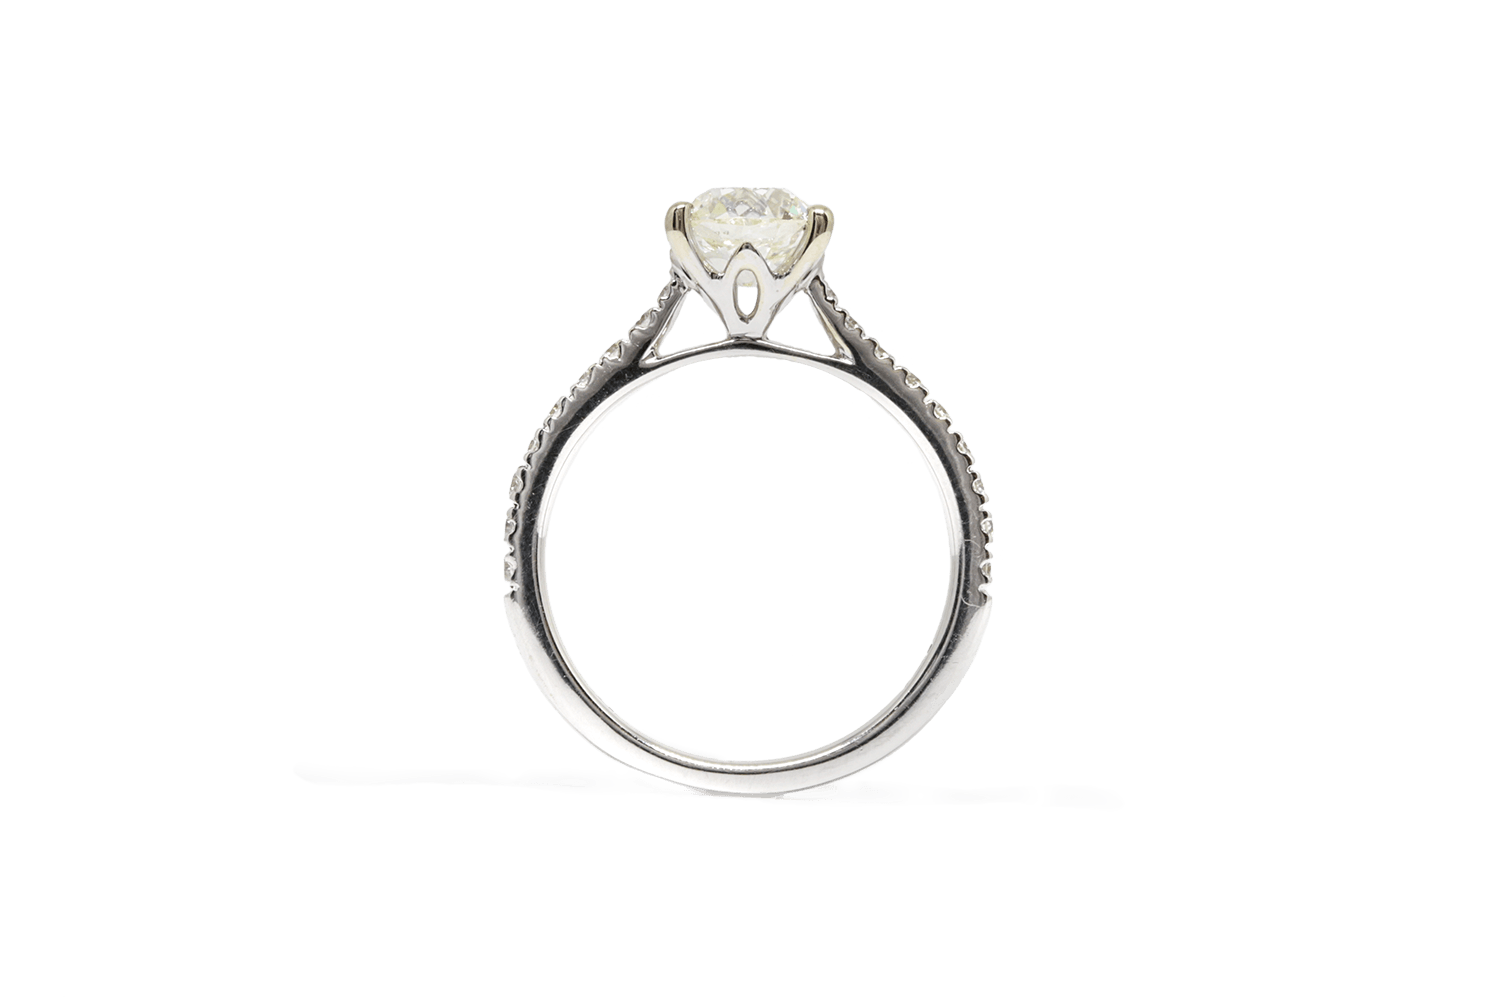 1 Carat Old Cut Diamond Ring